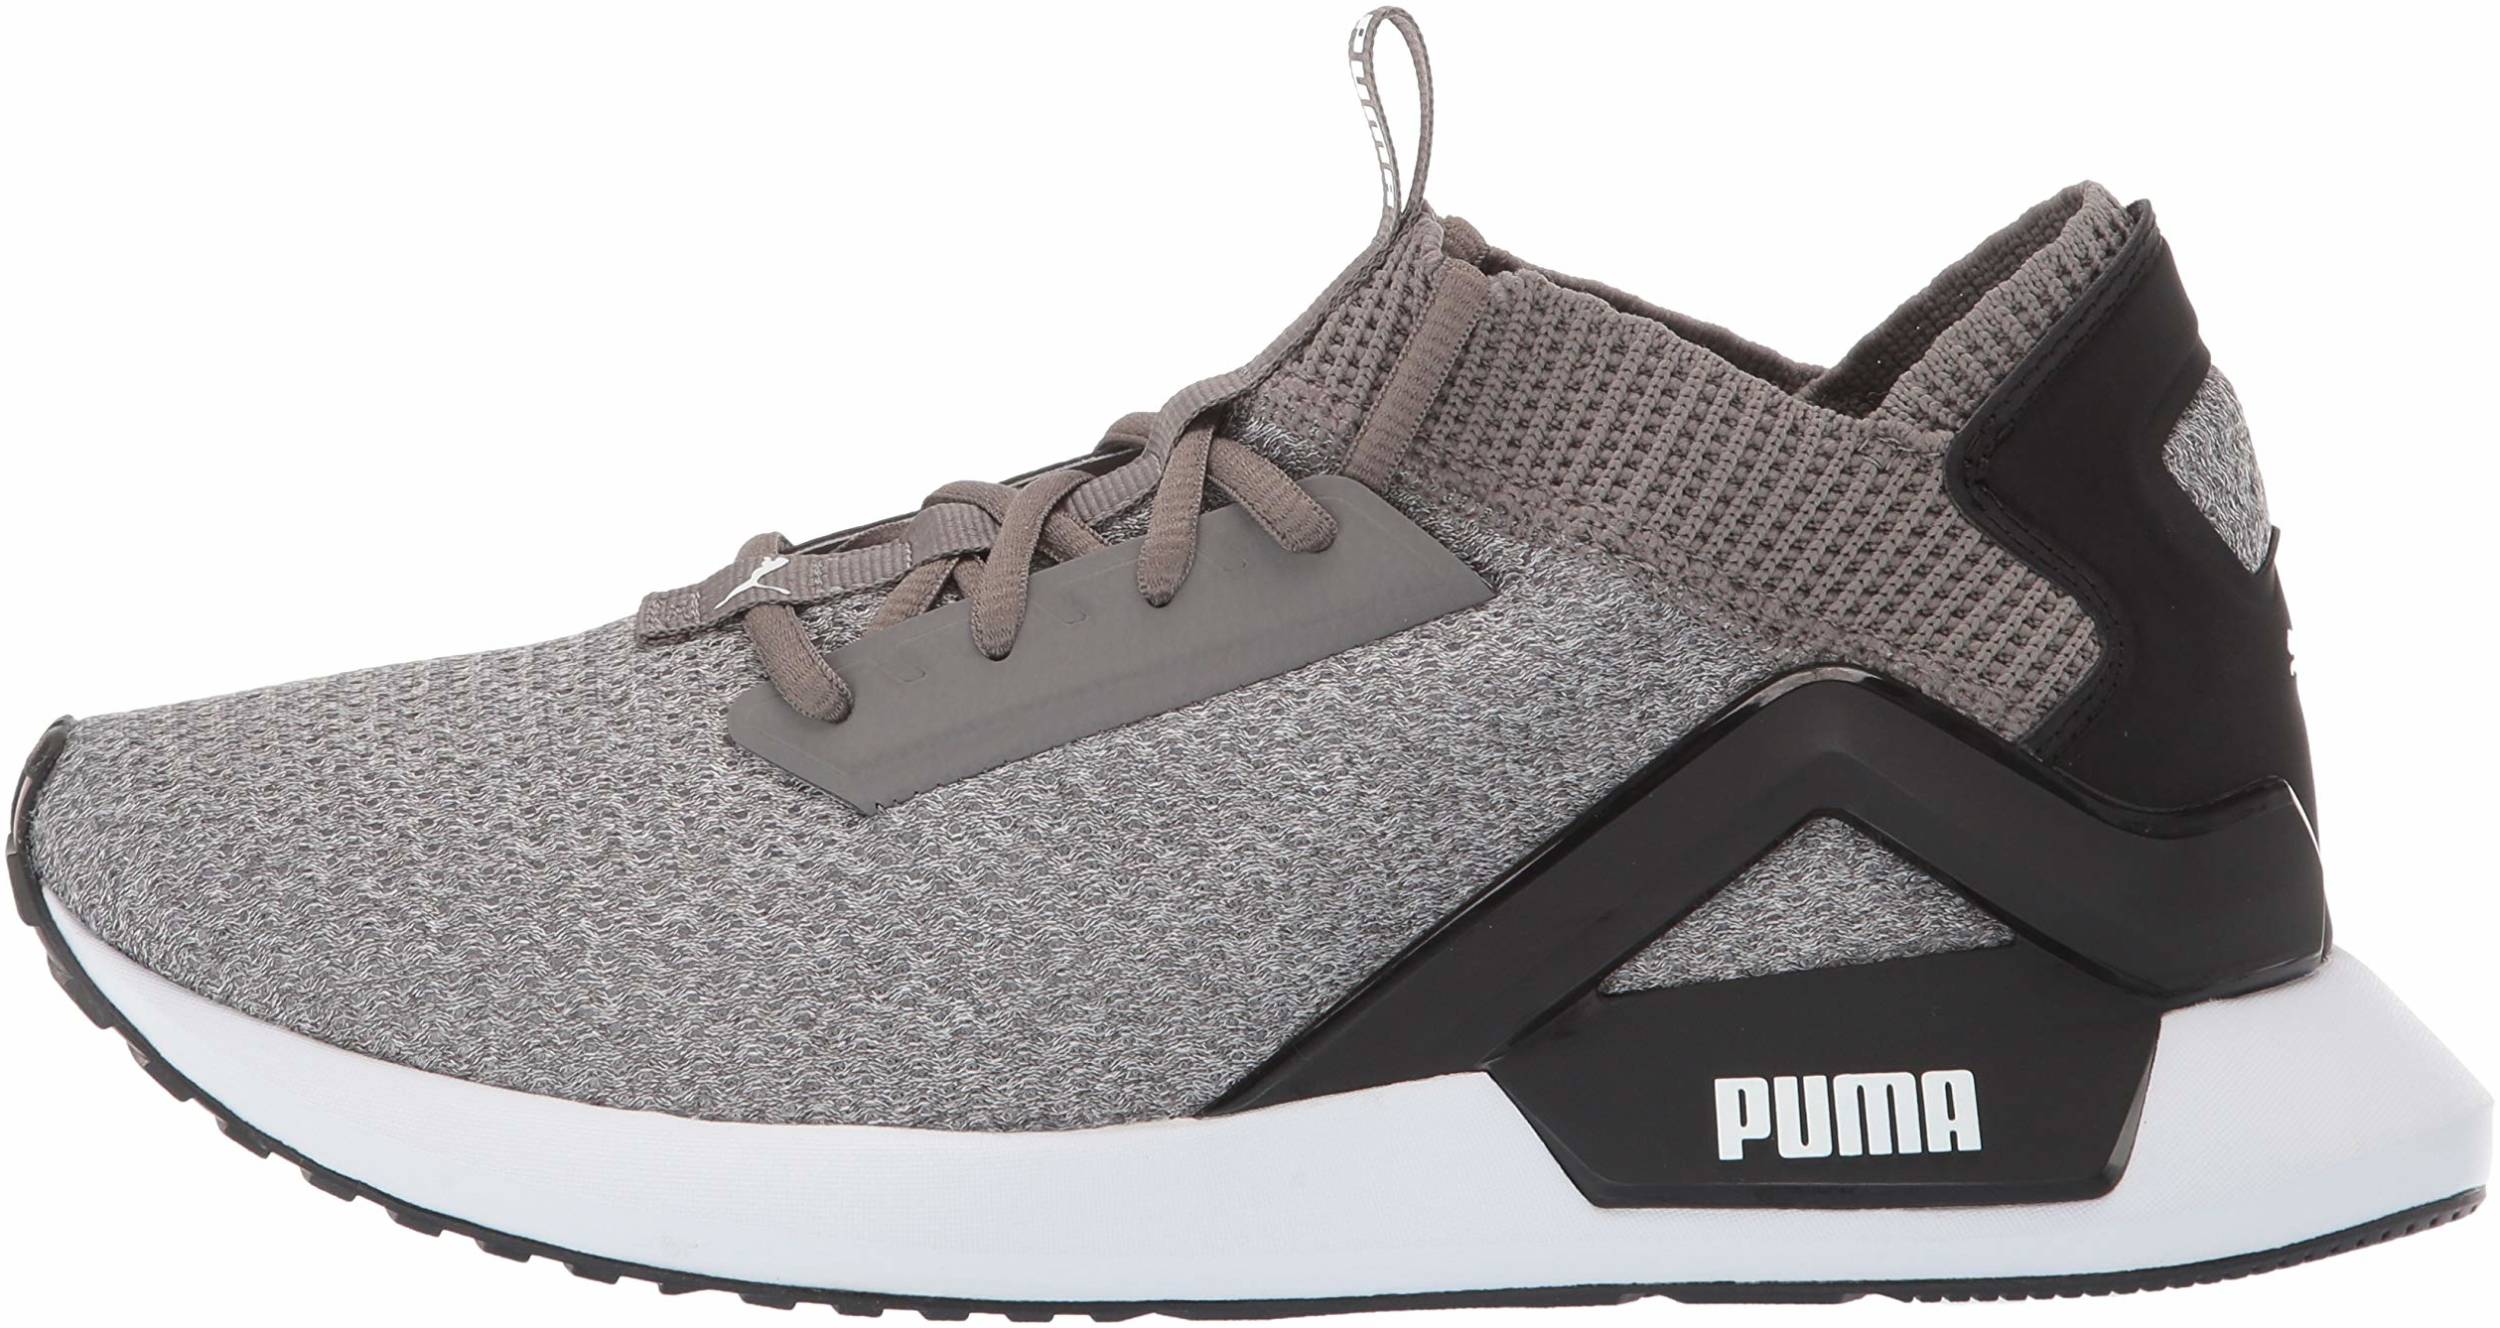 puma evertrack shoes price